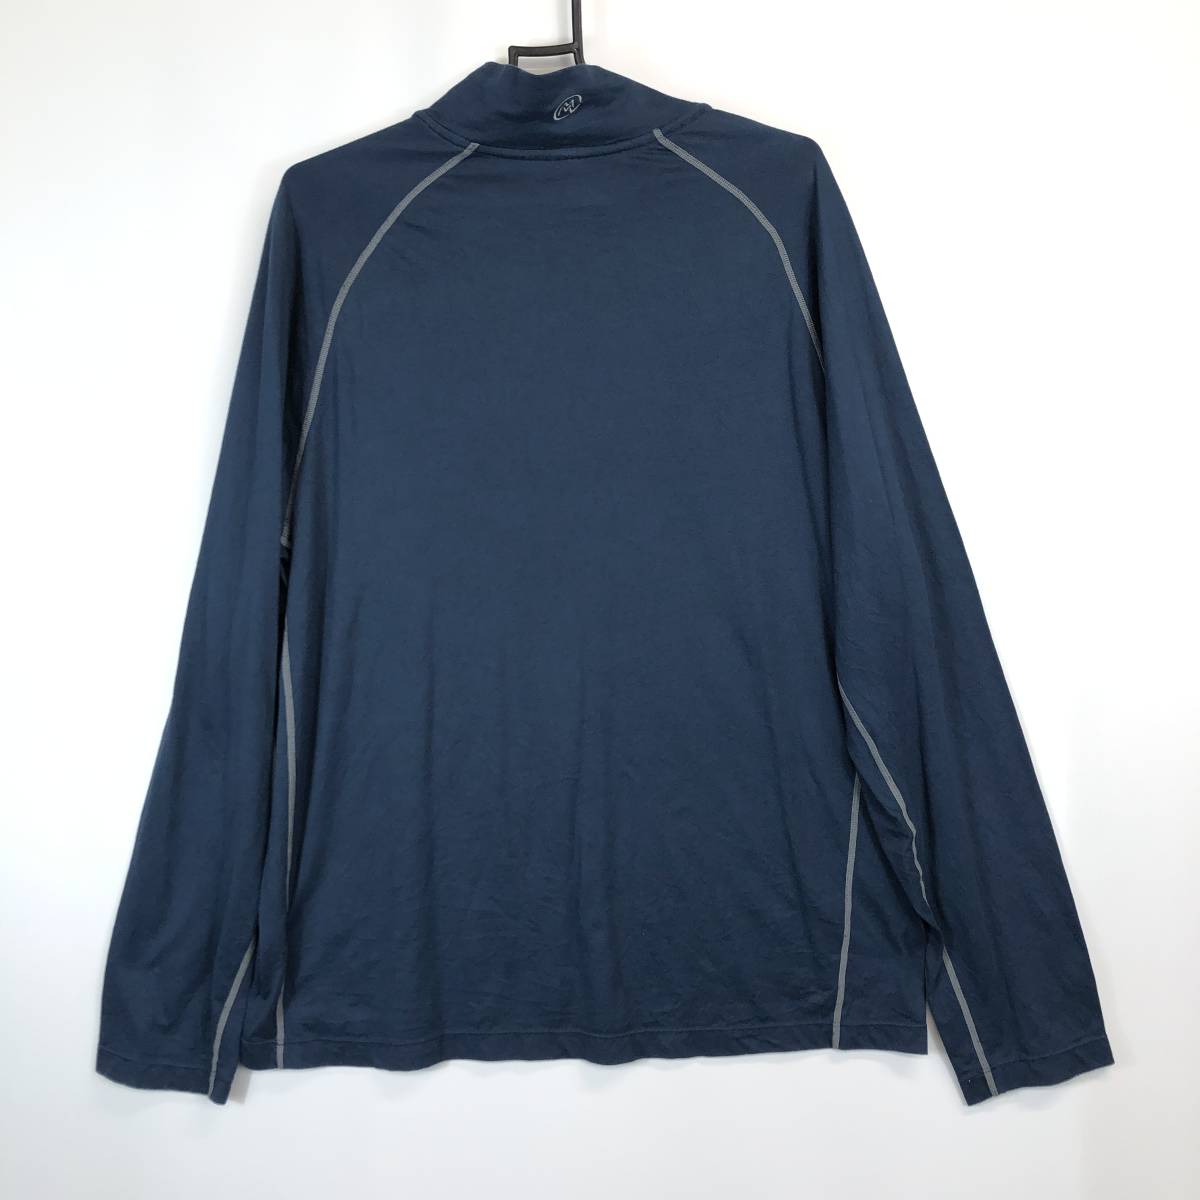  Cloudveil Cloudveil длинный рукав половина Zip рубашка XL размер 982296 USA б/у одежда 